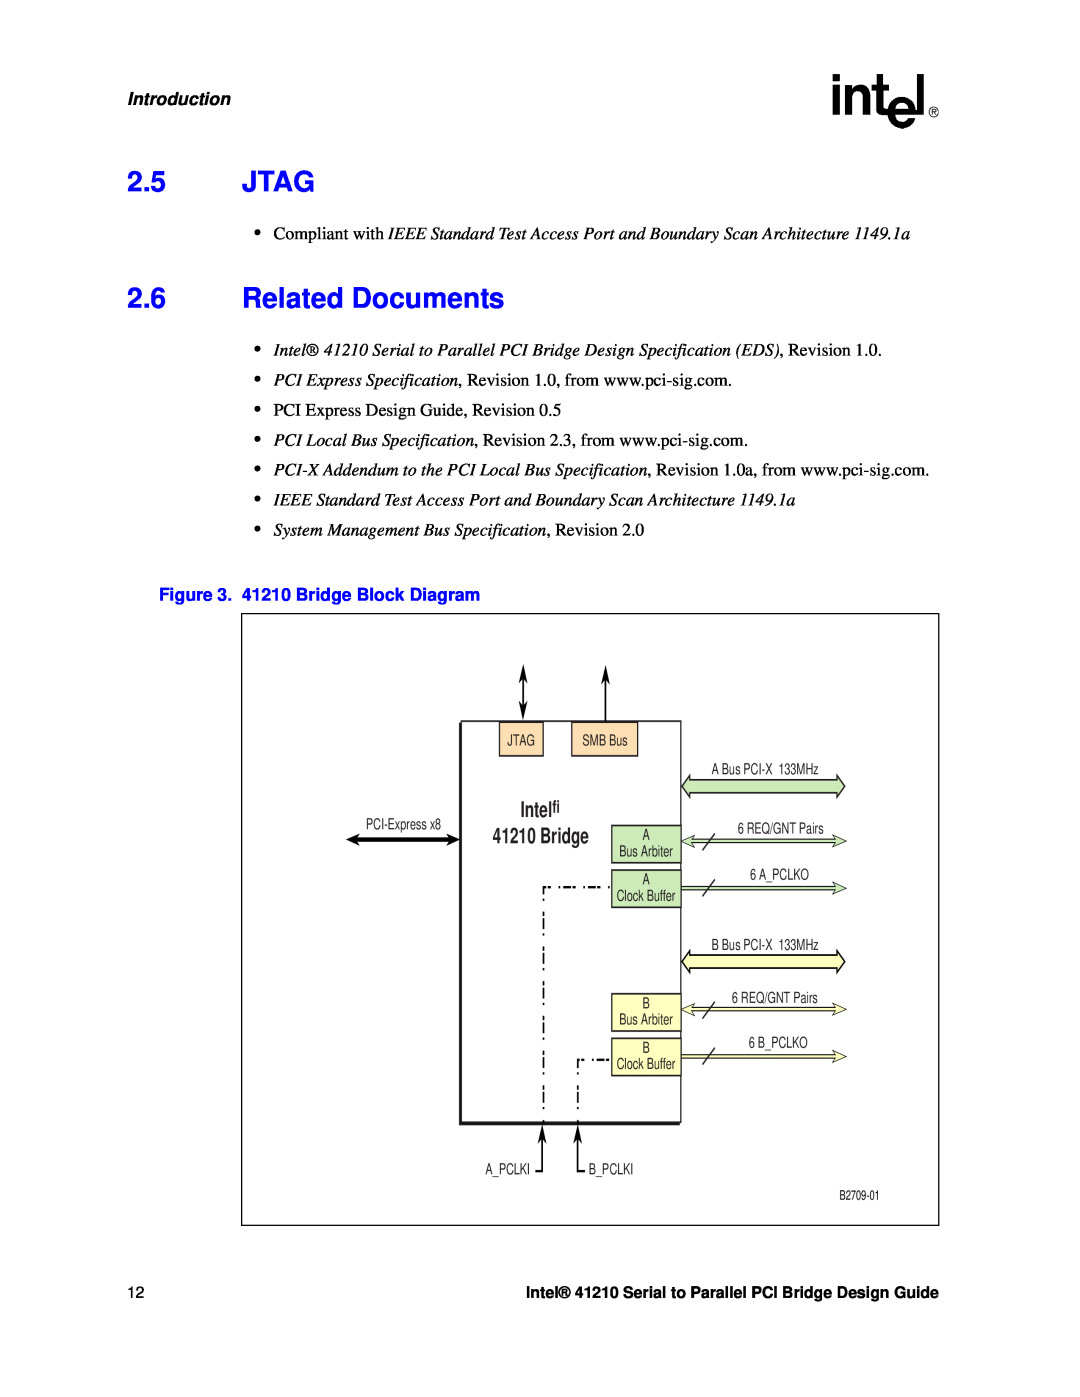 Intel manual Jtag, Related Documents, 41210 Bridge Block Diagram, Intelﬁ 41210 Bridge A, Introduction 